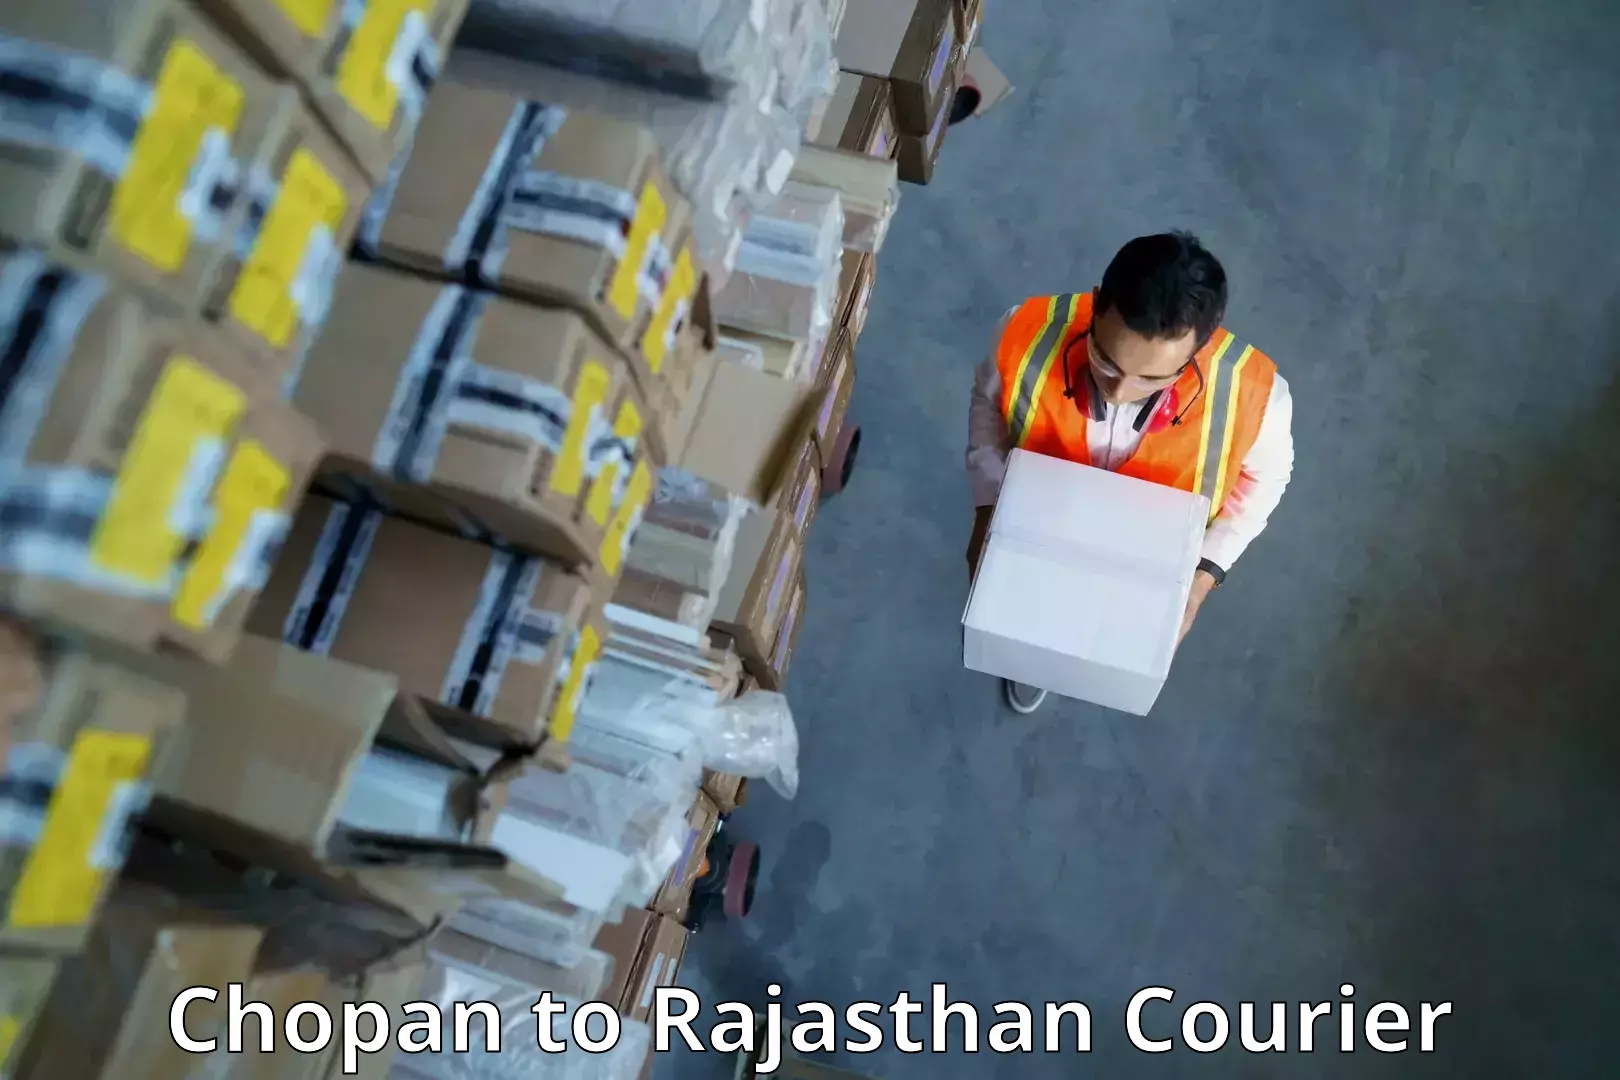 Smart shipping technology Chopan to Rajasthan